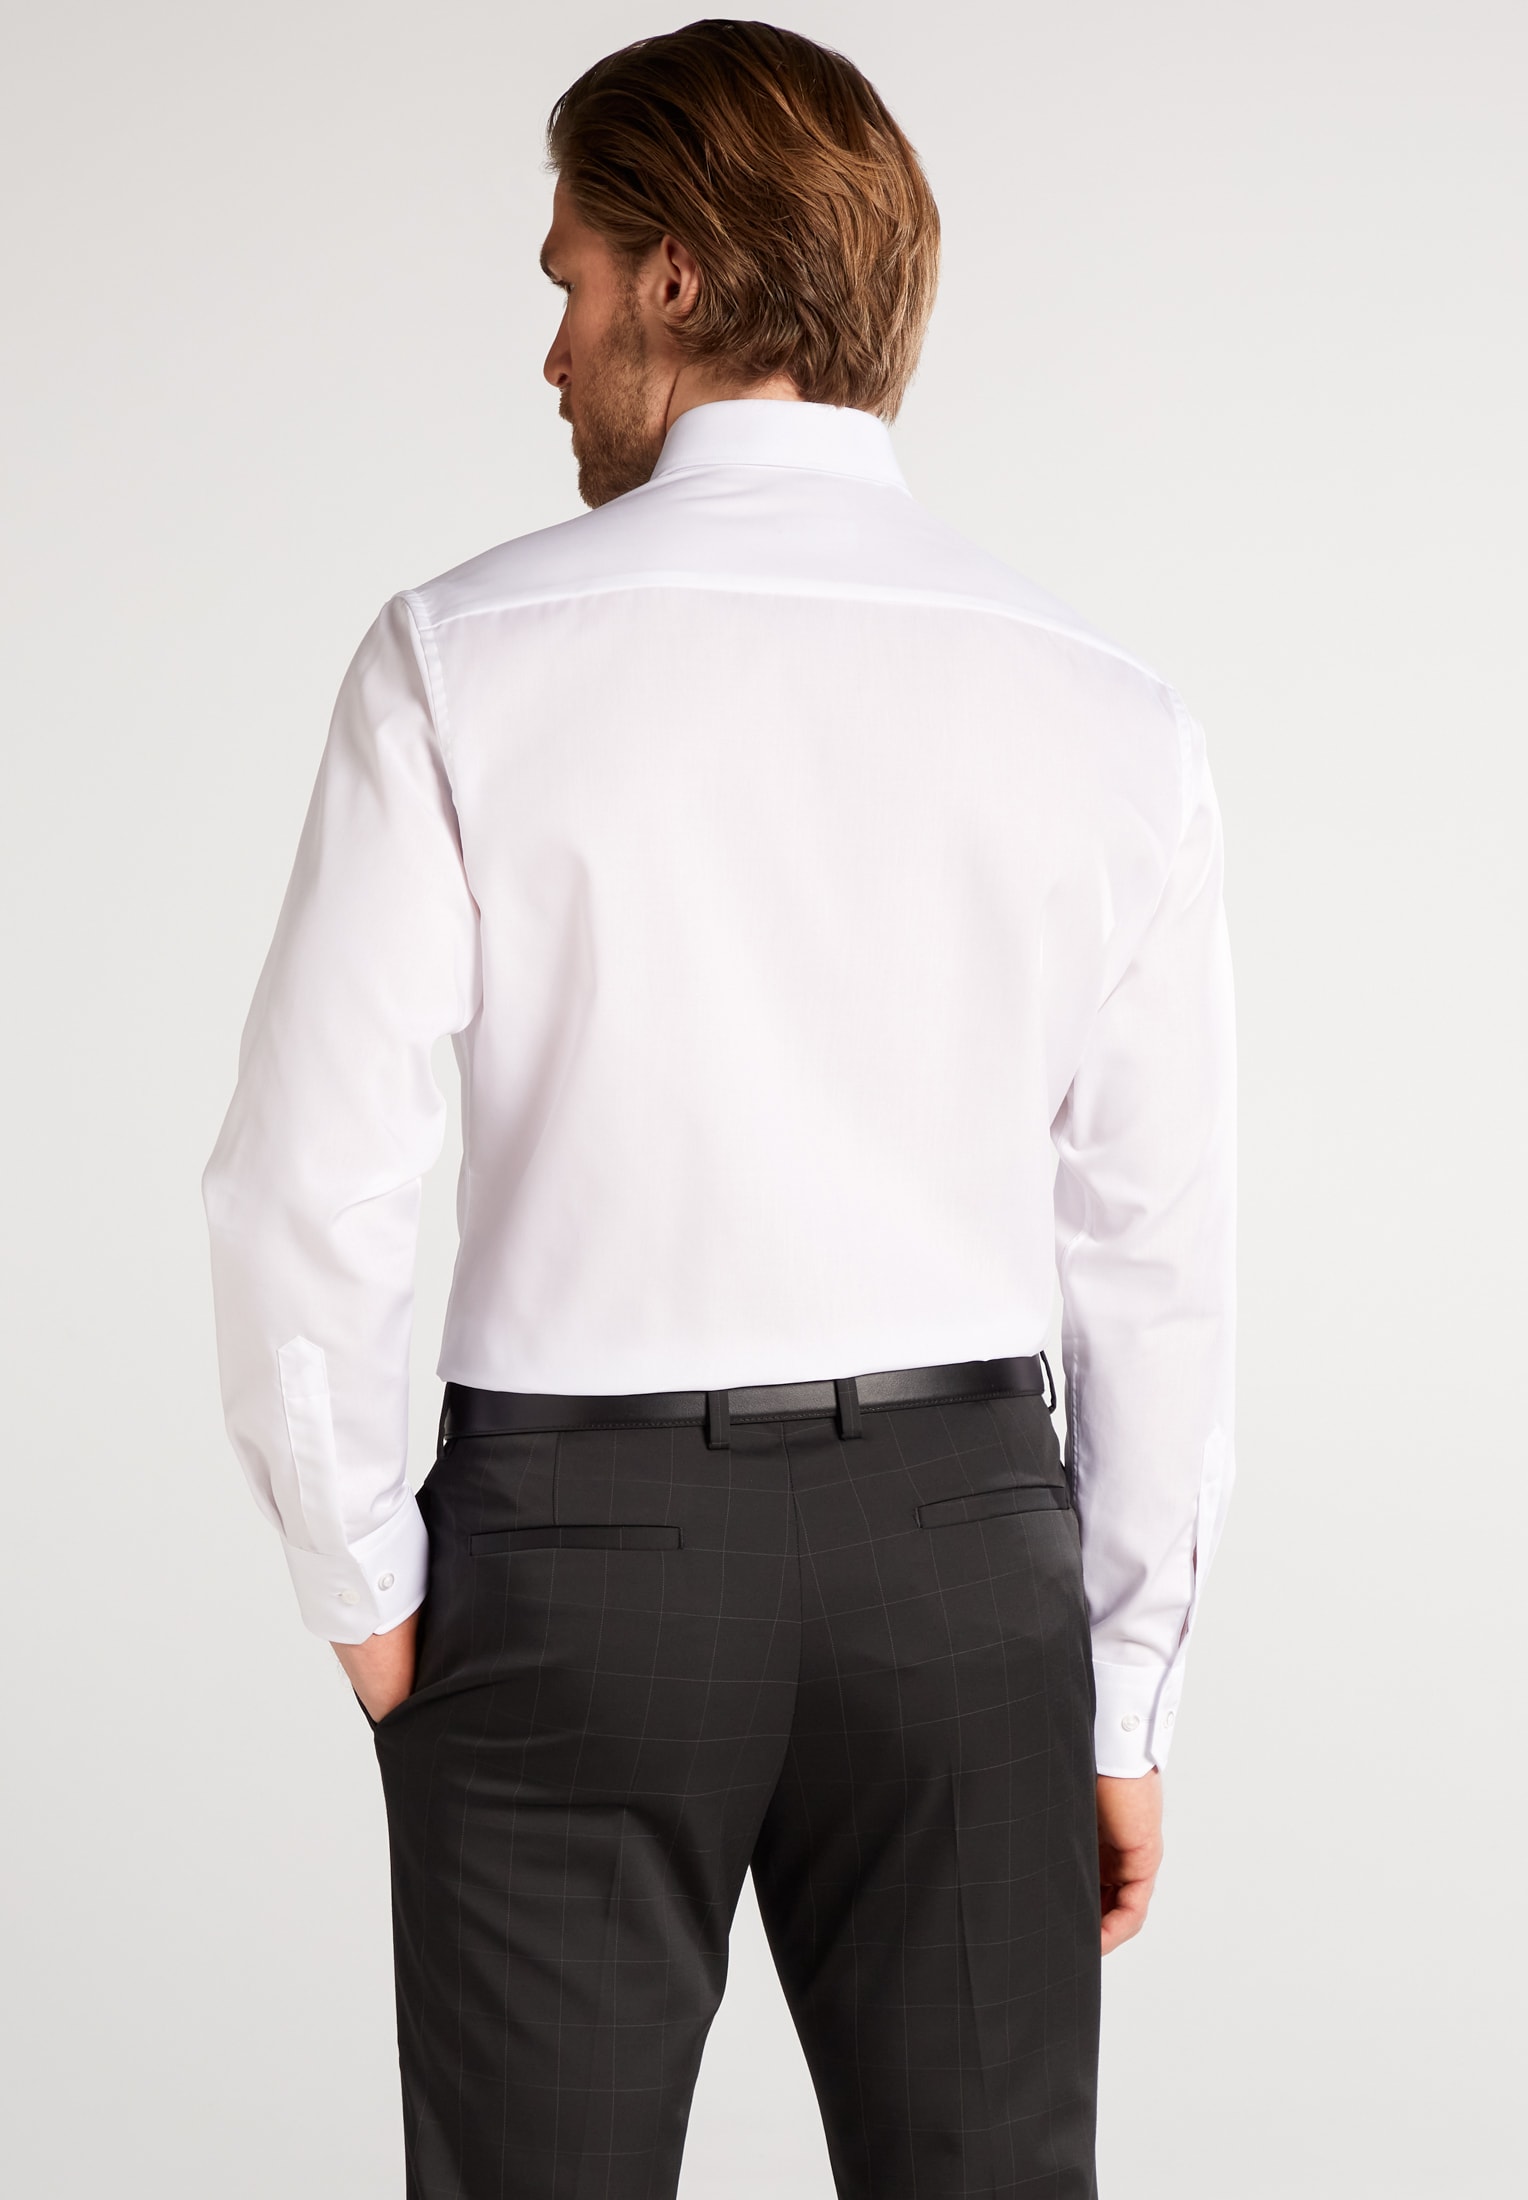 MODERN FIT Original Shirt in weiß unifarben | weiß | 44 | Langarm |  1SH00113-00-01-44-1/1